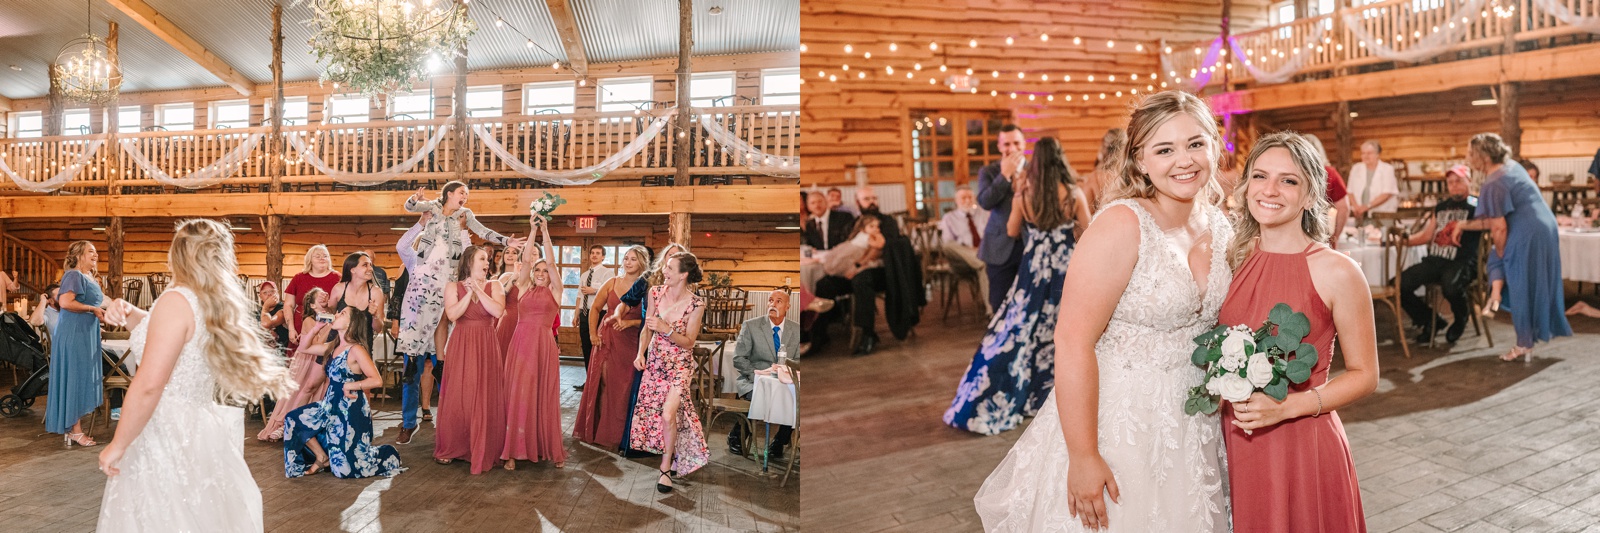 Dusty Rose and Greenery Diamond Lake Event Barn Wedding in Scio Ohio_0066.jpg